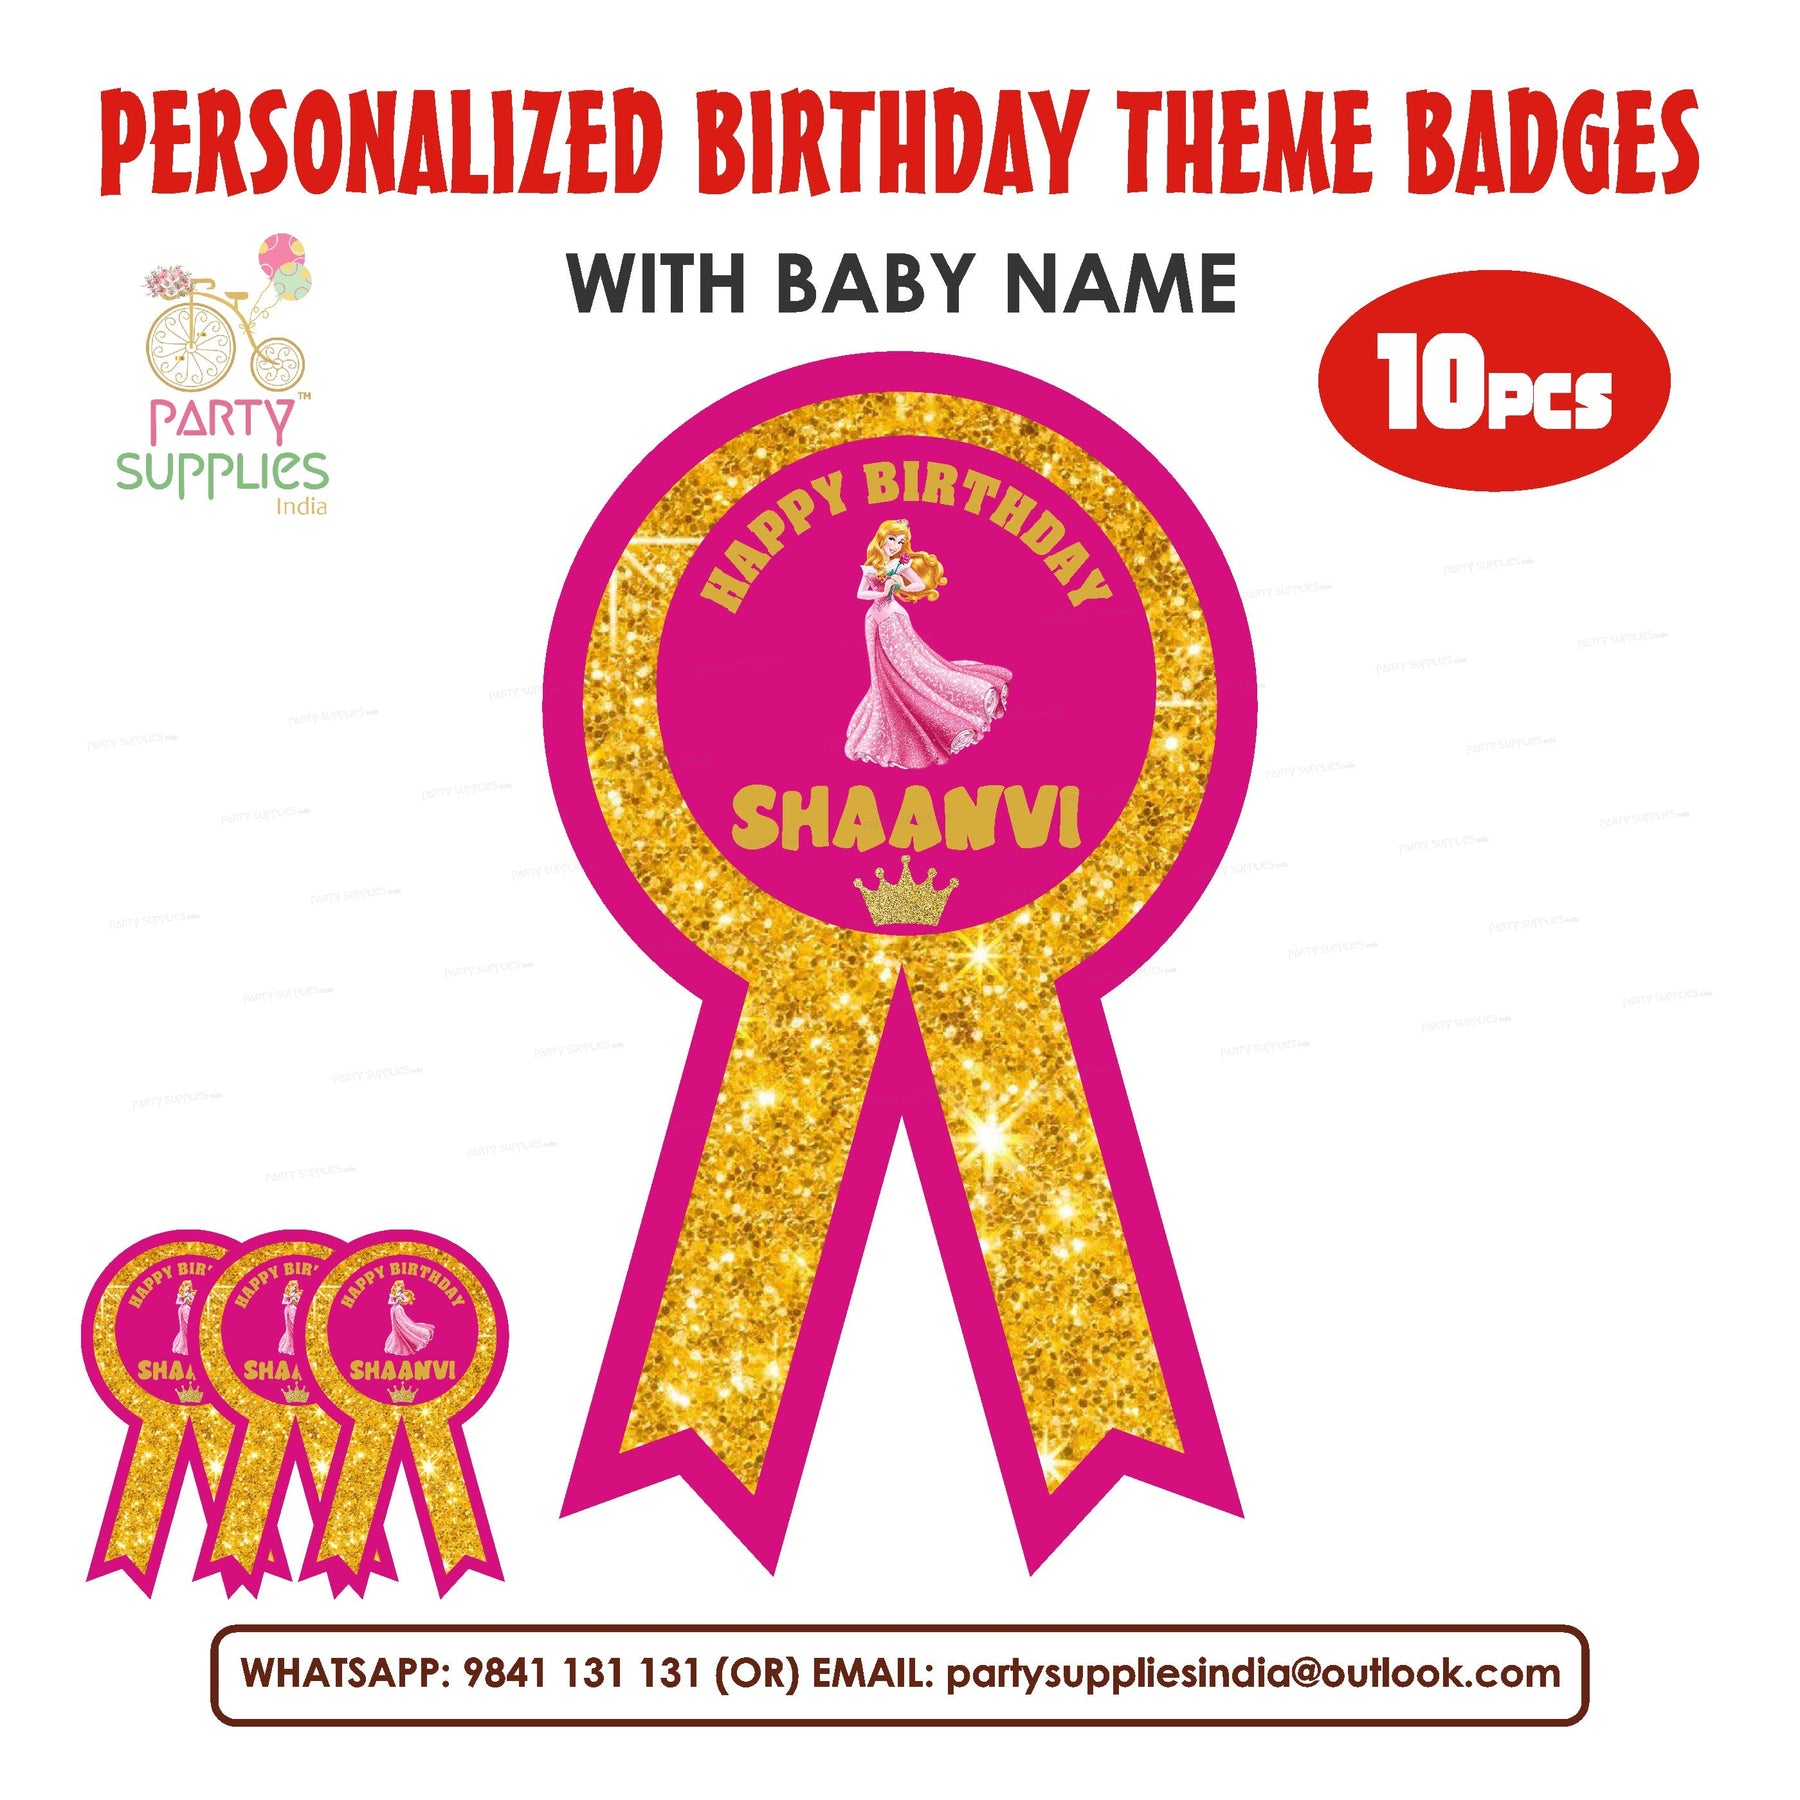 PSI Princess Theme Badges